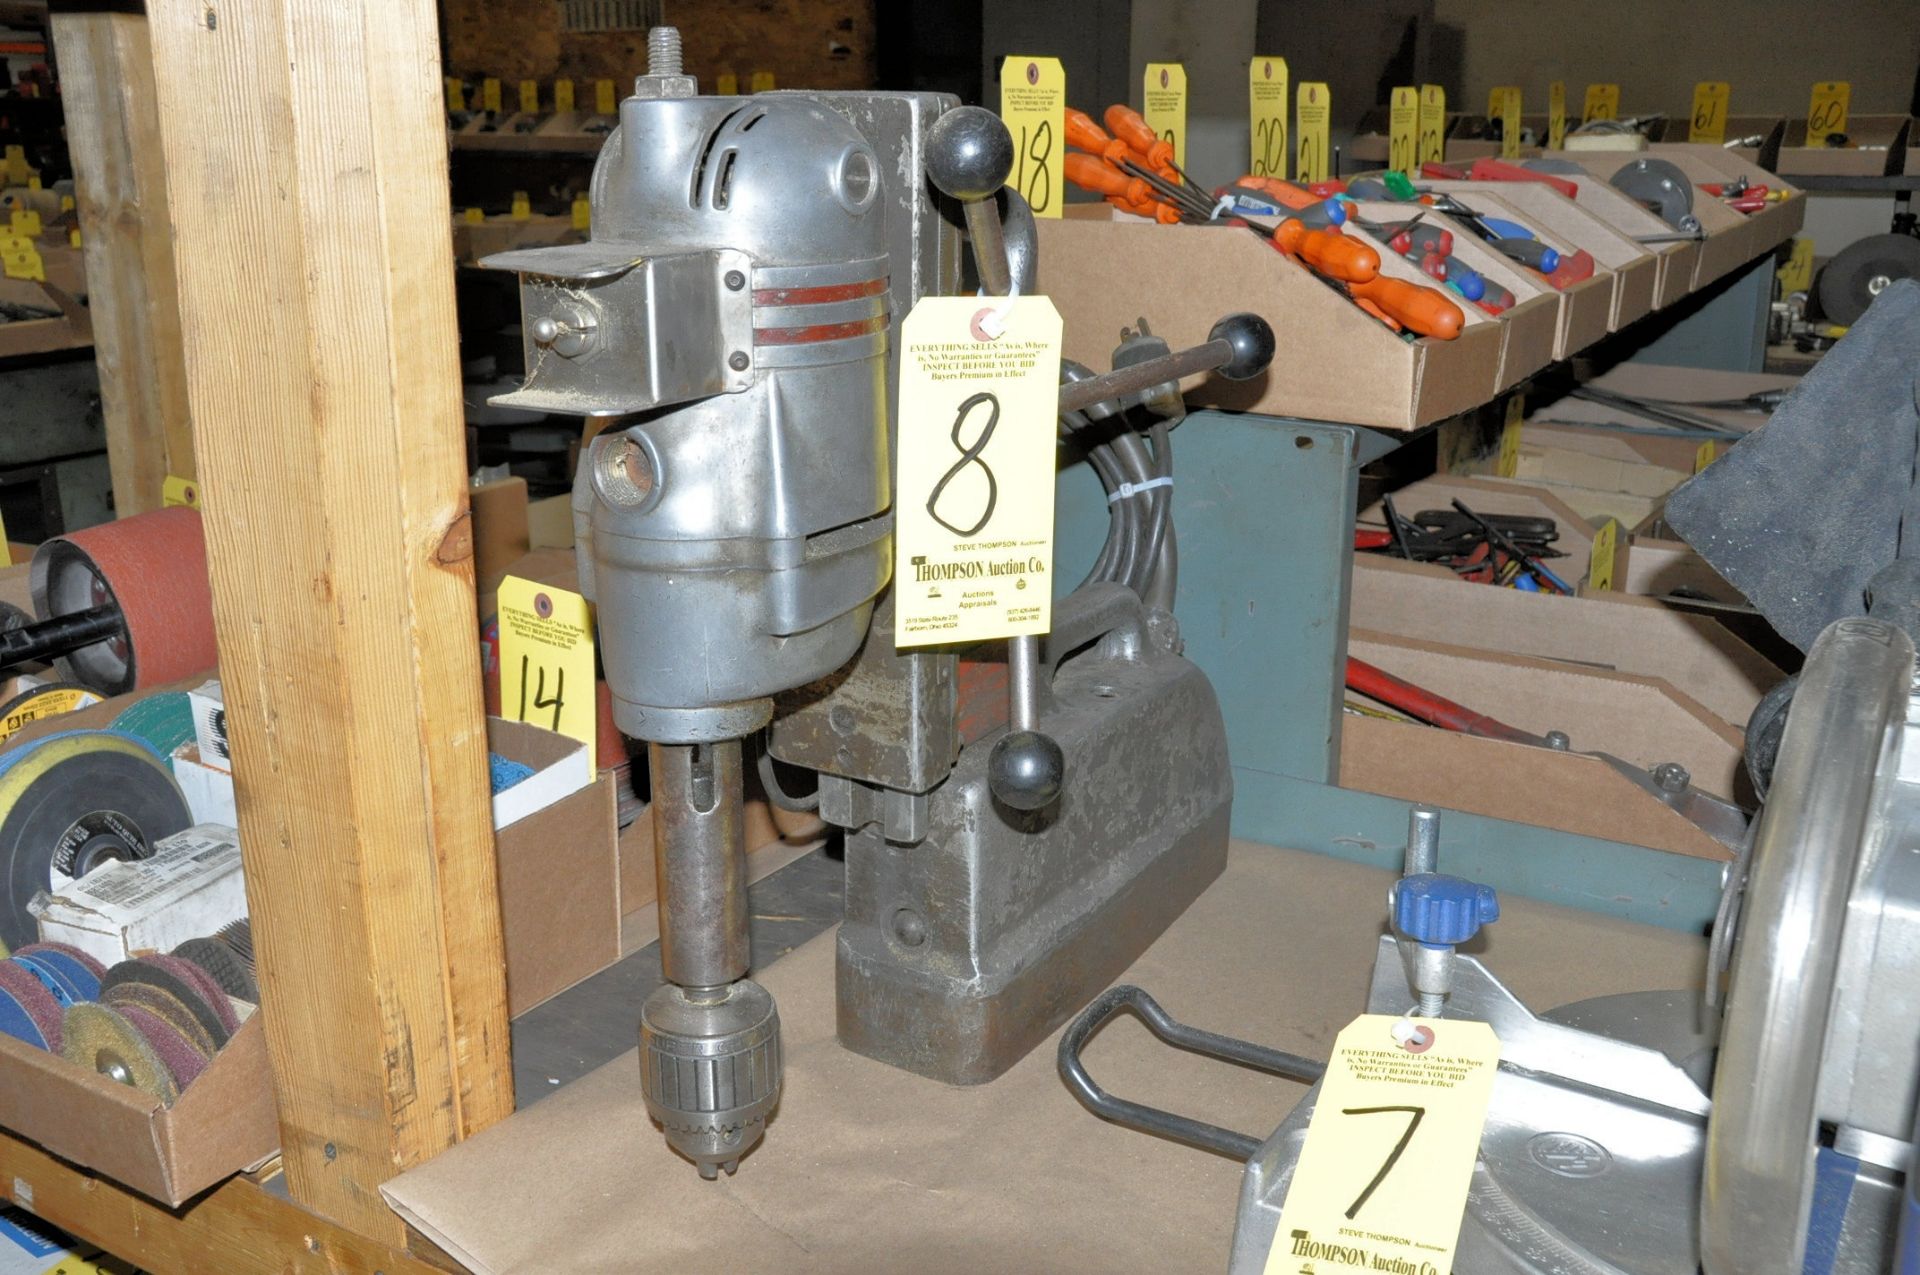 Milwaukee Model B2, Magnetic Base Drill Press, S/n 4690, 1/2" Chuck